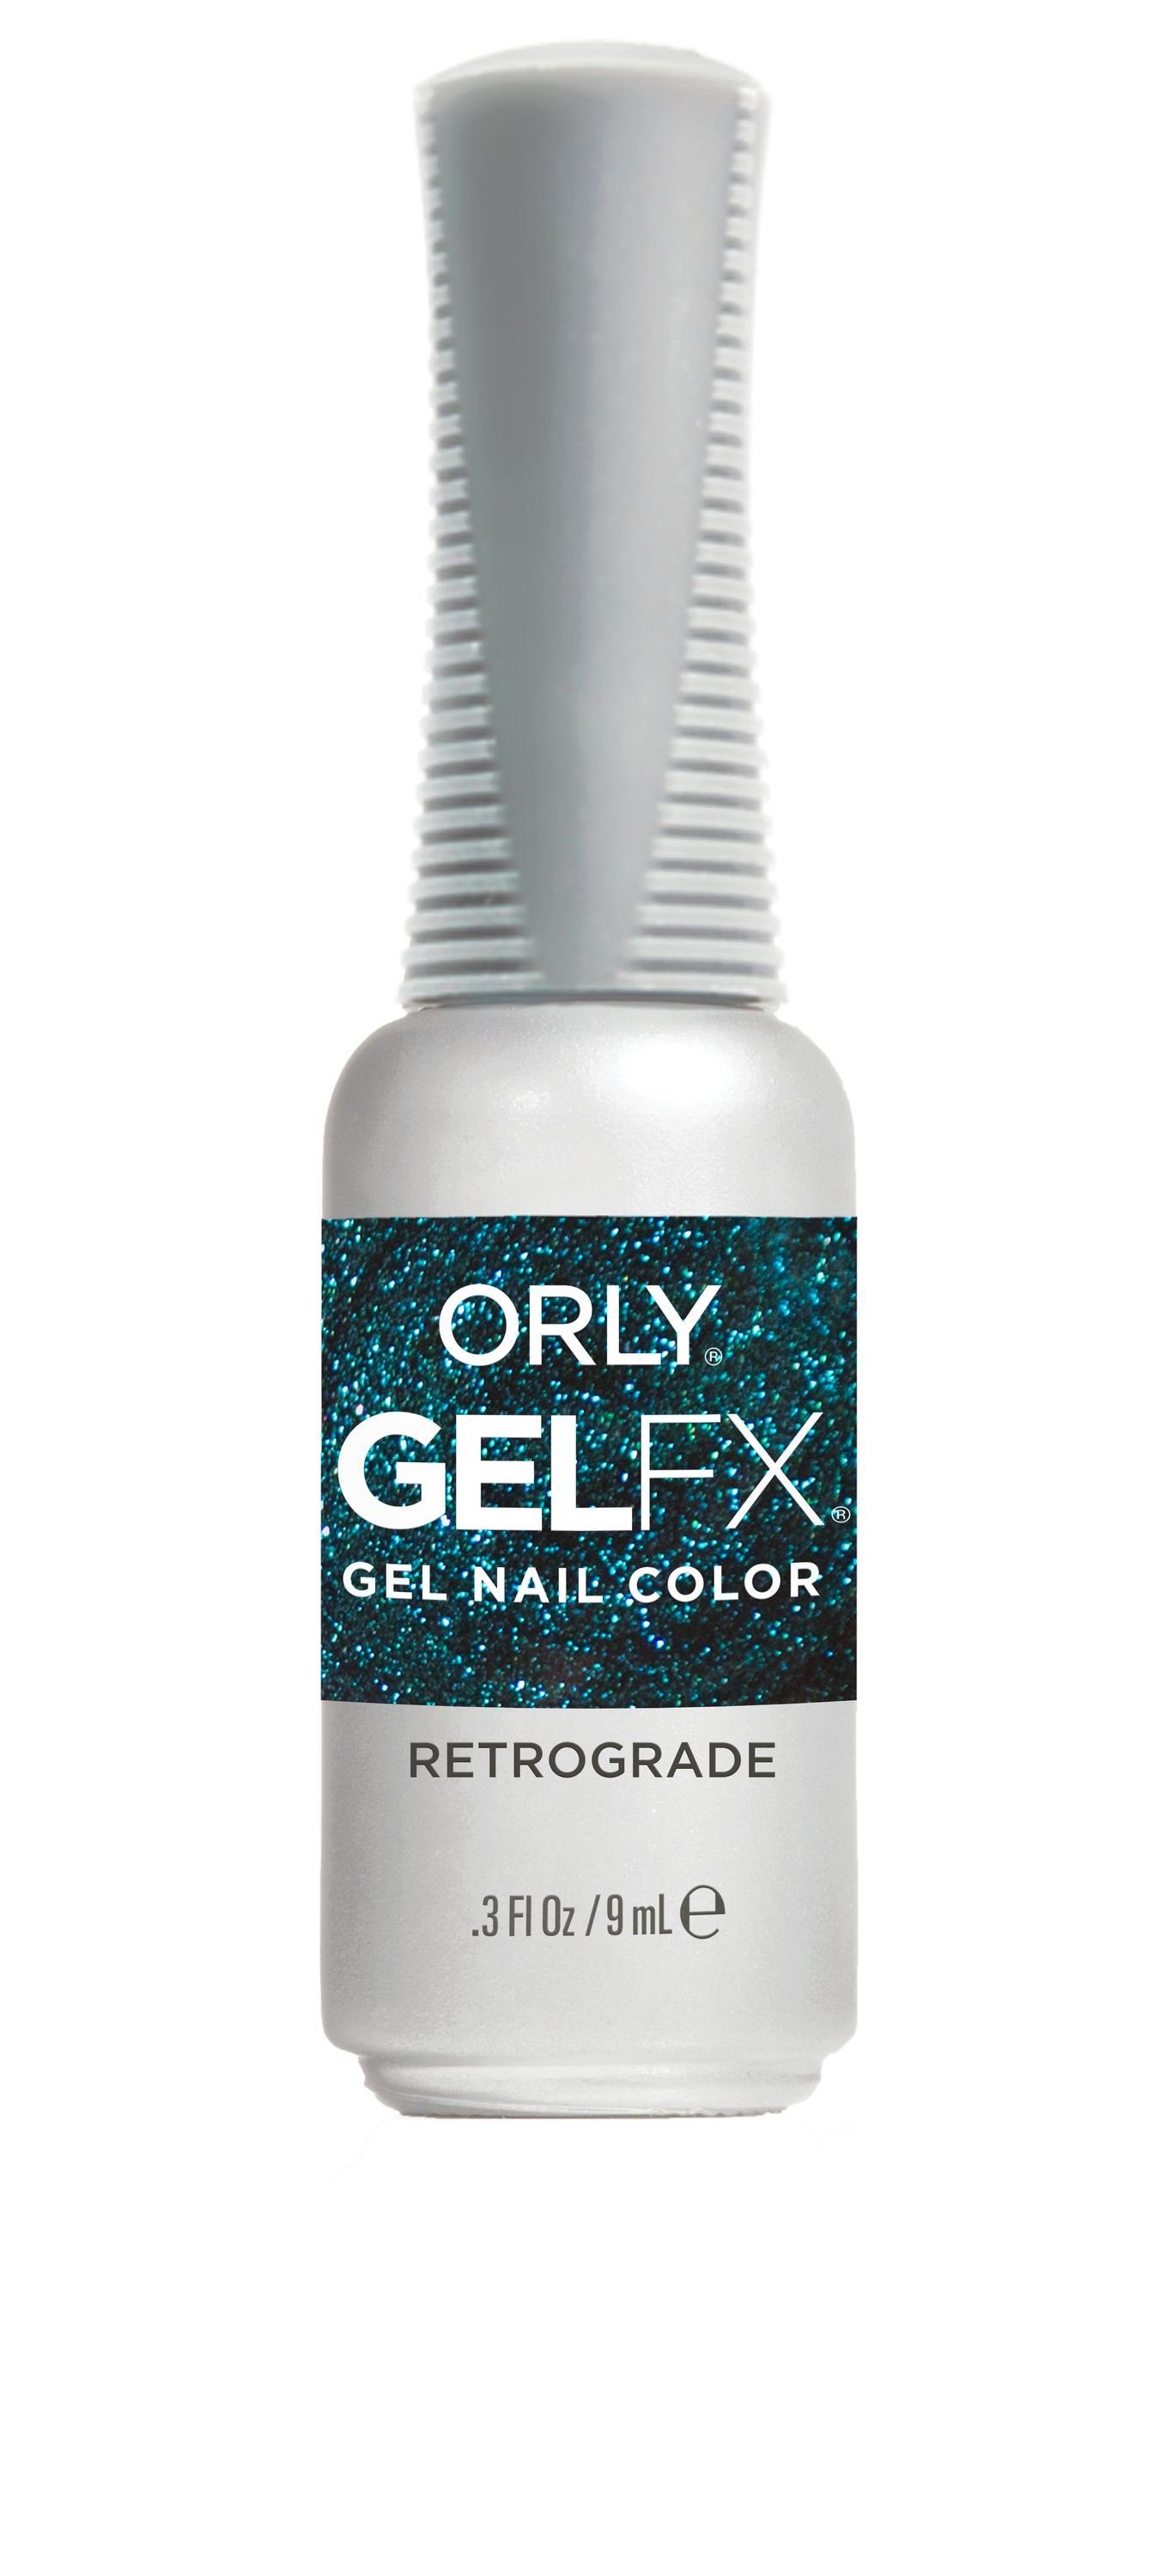 ORLY UV-Nagellack GEL FX Retrograde, 9ML